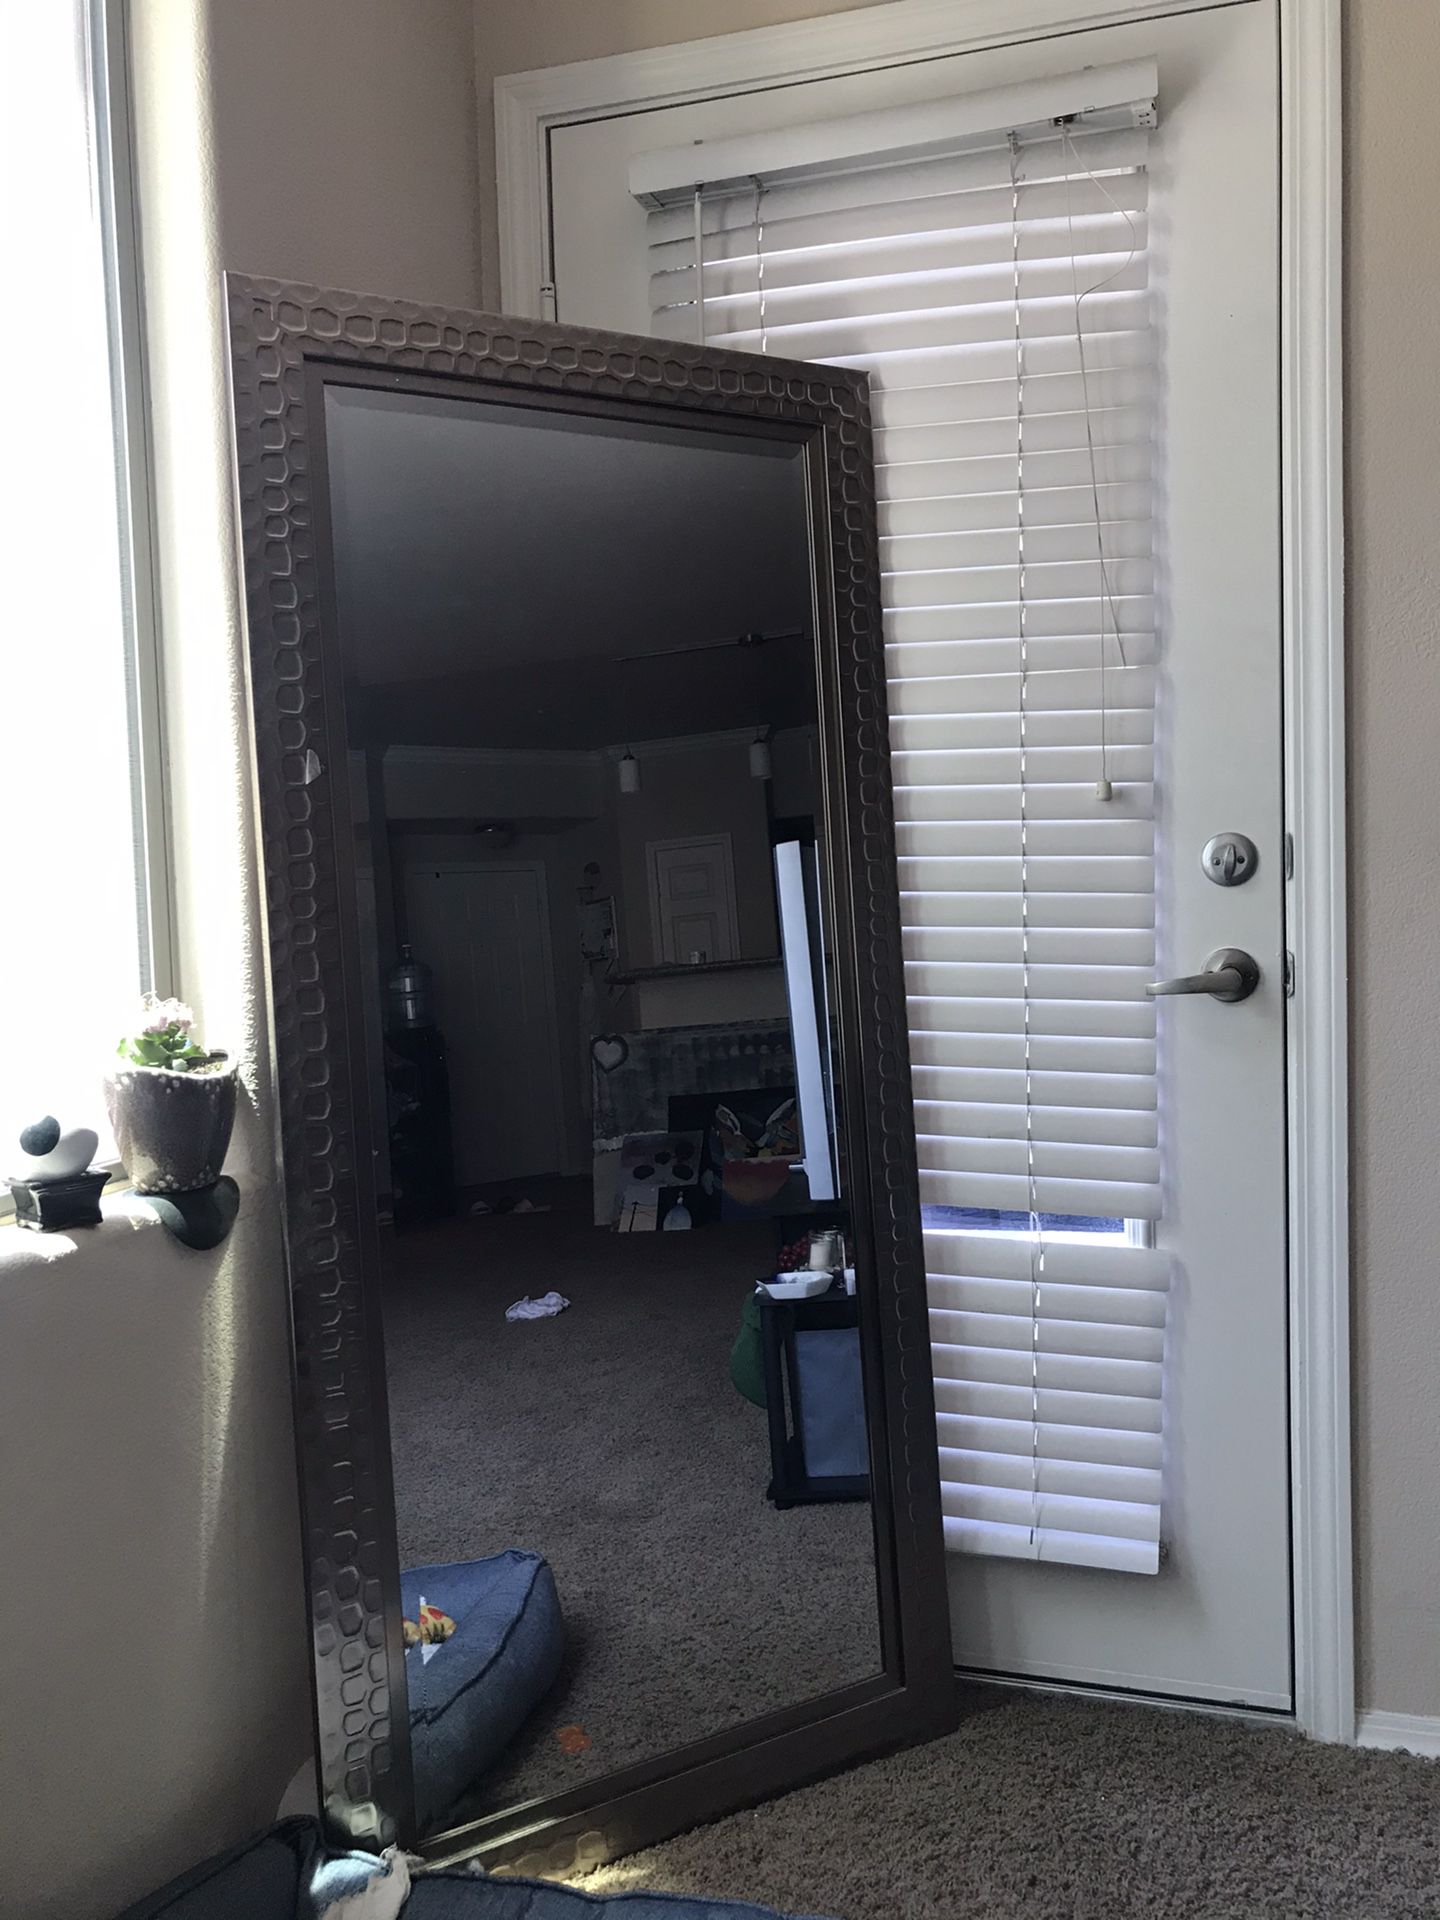 Body mirror + wall mirror